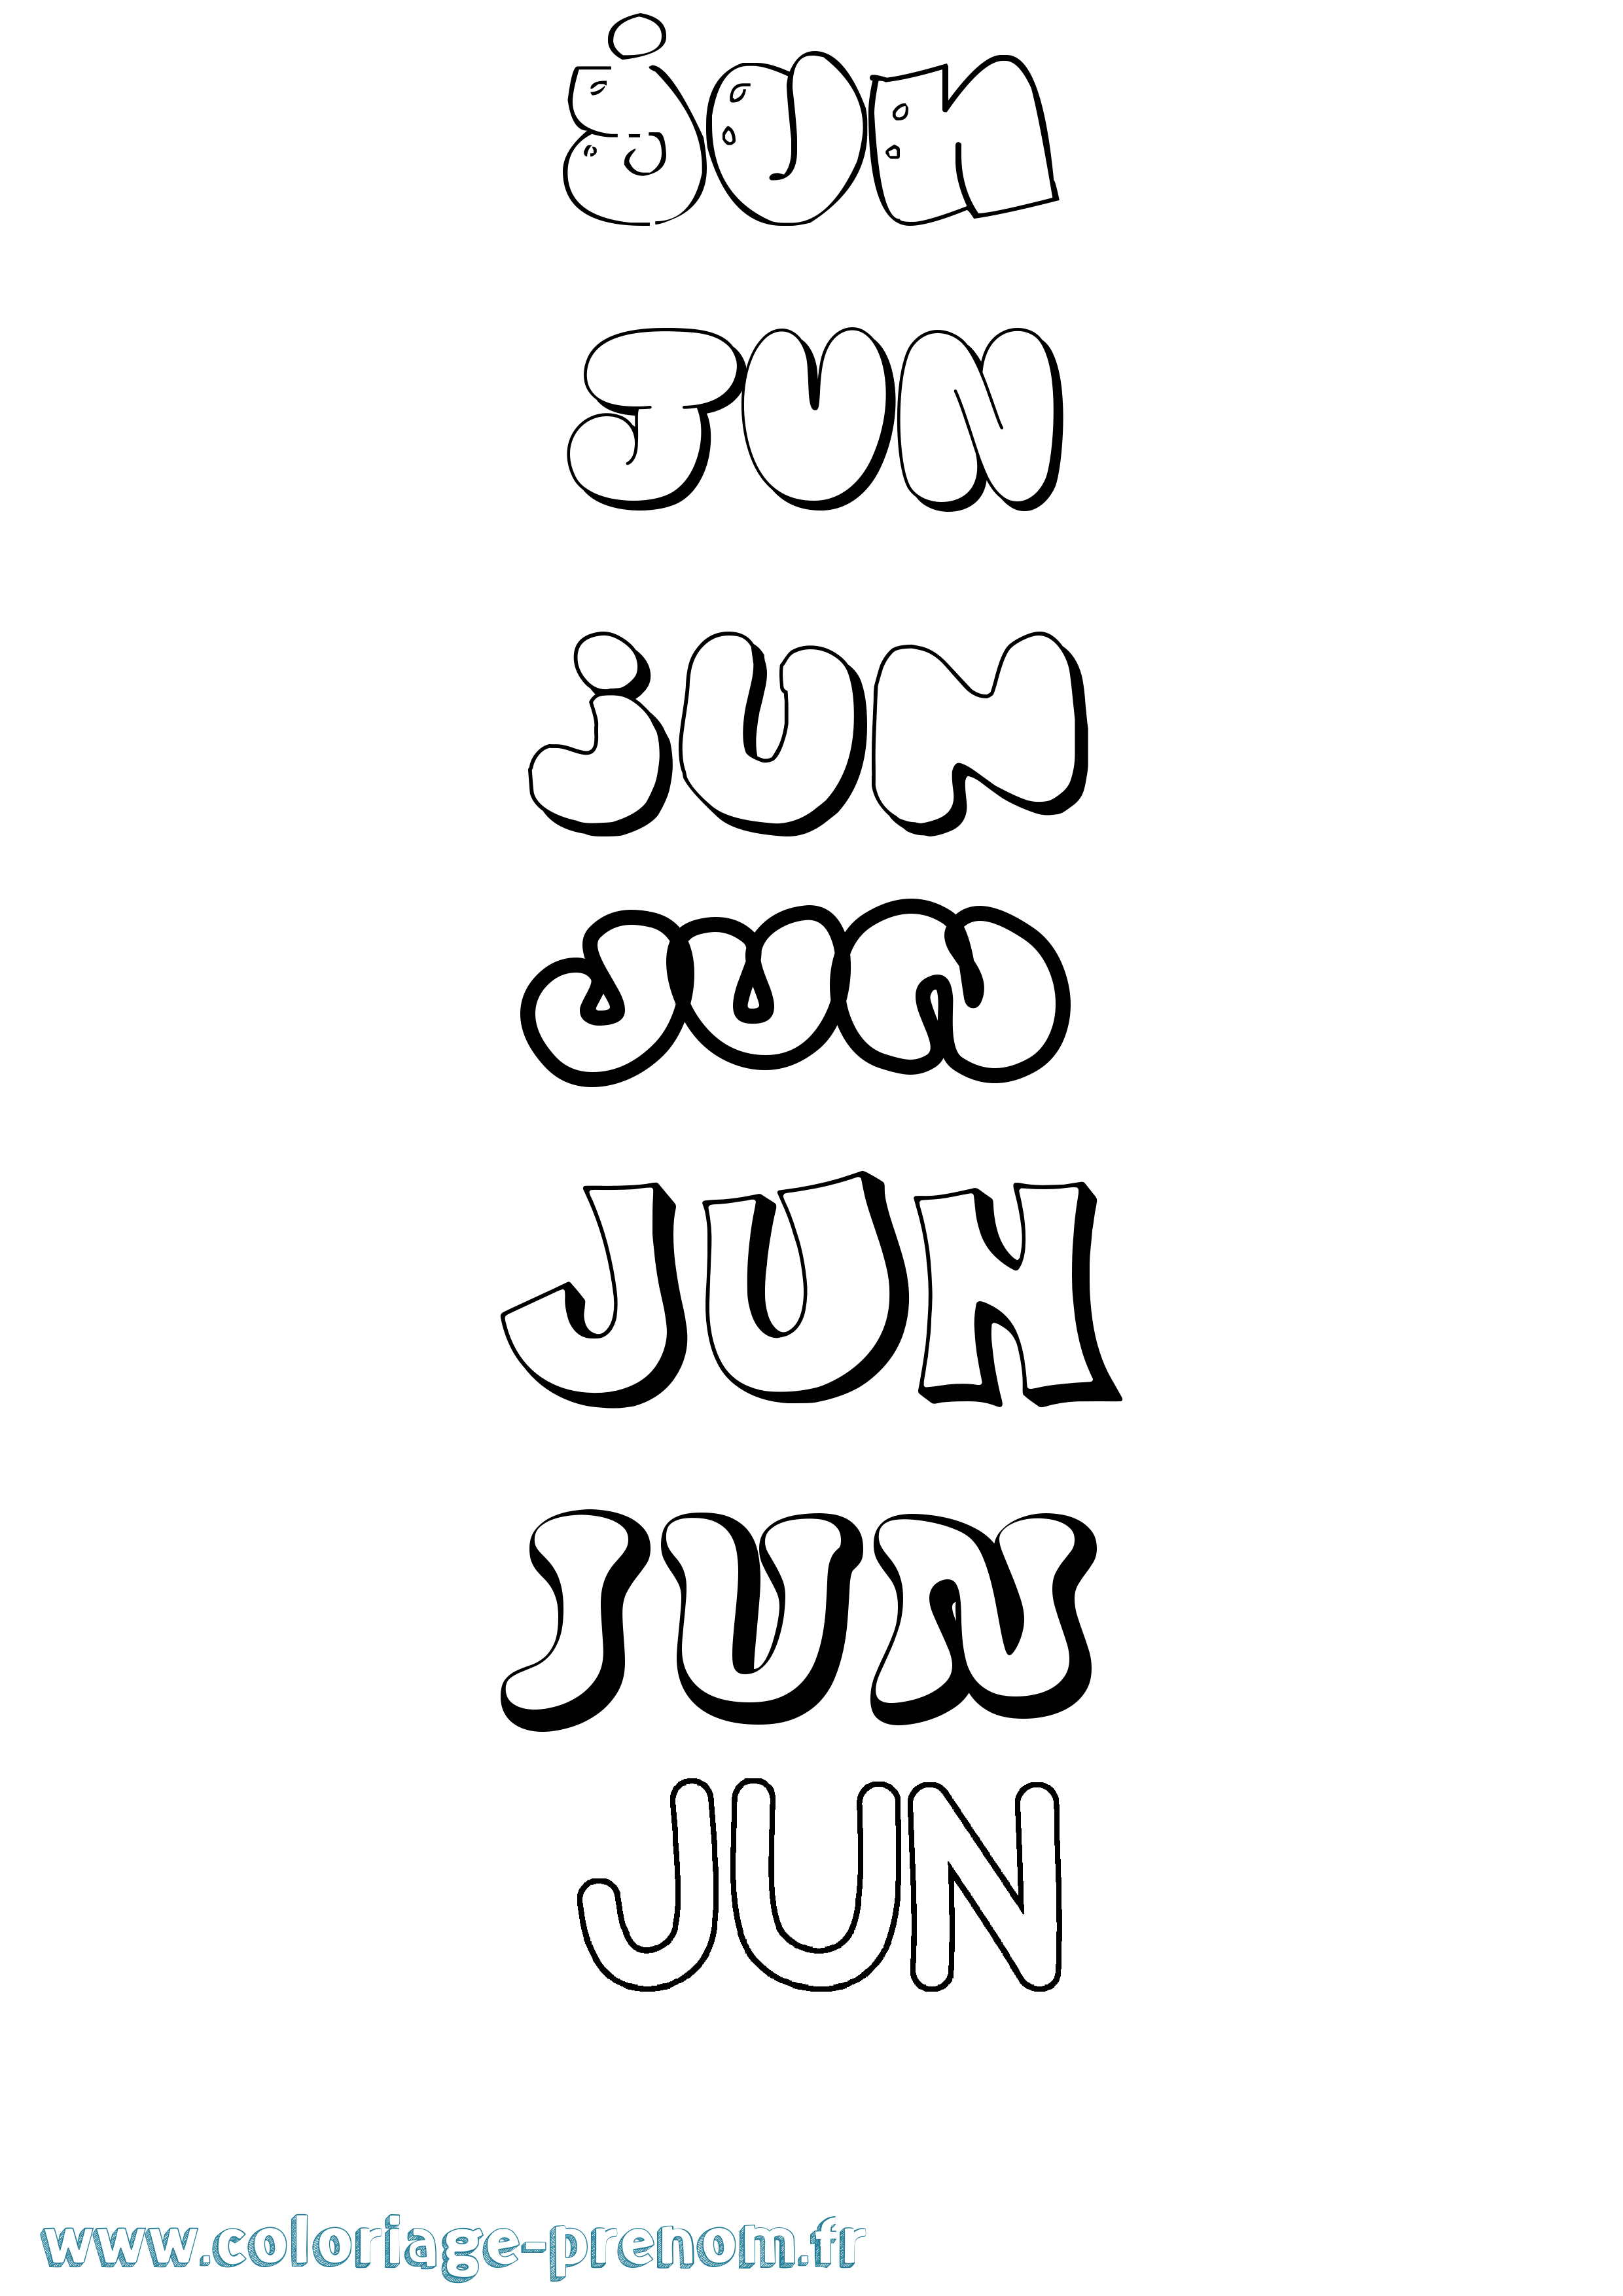 Coloriage prénom Jun Bubble